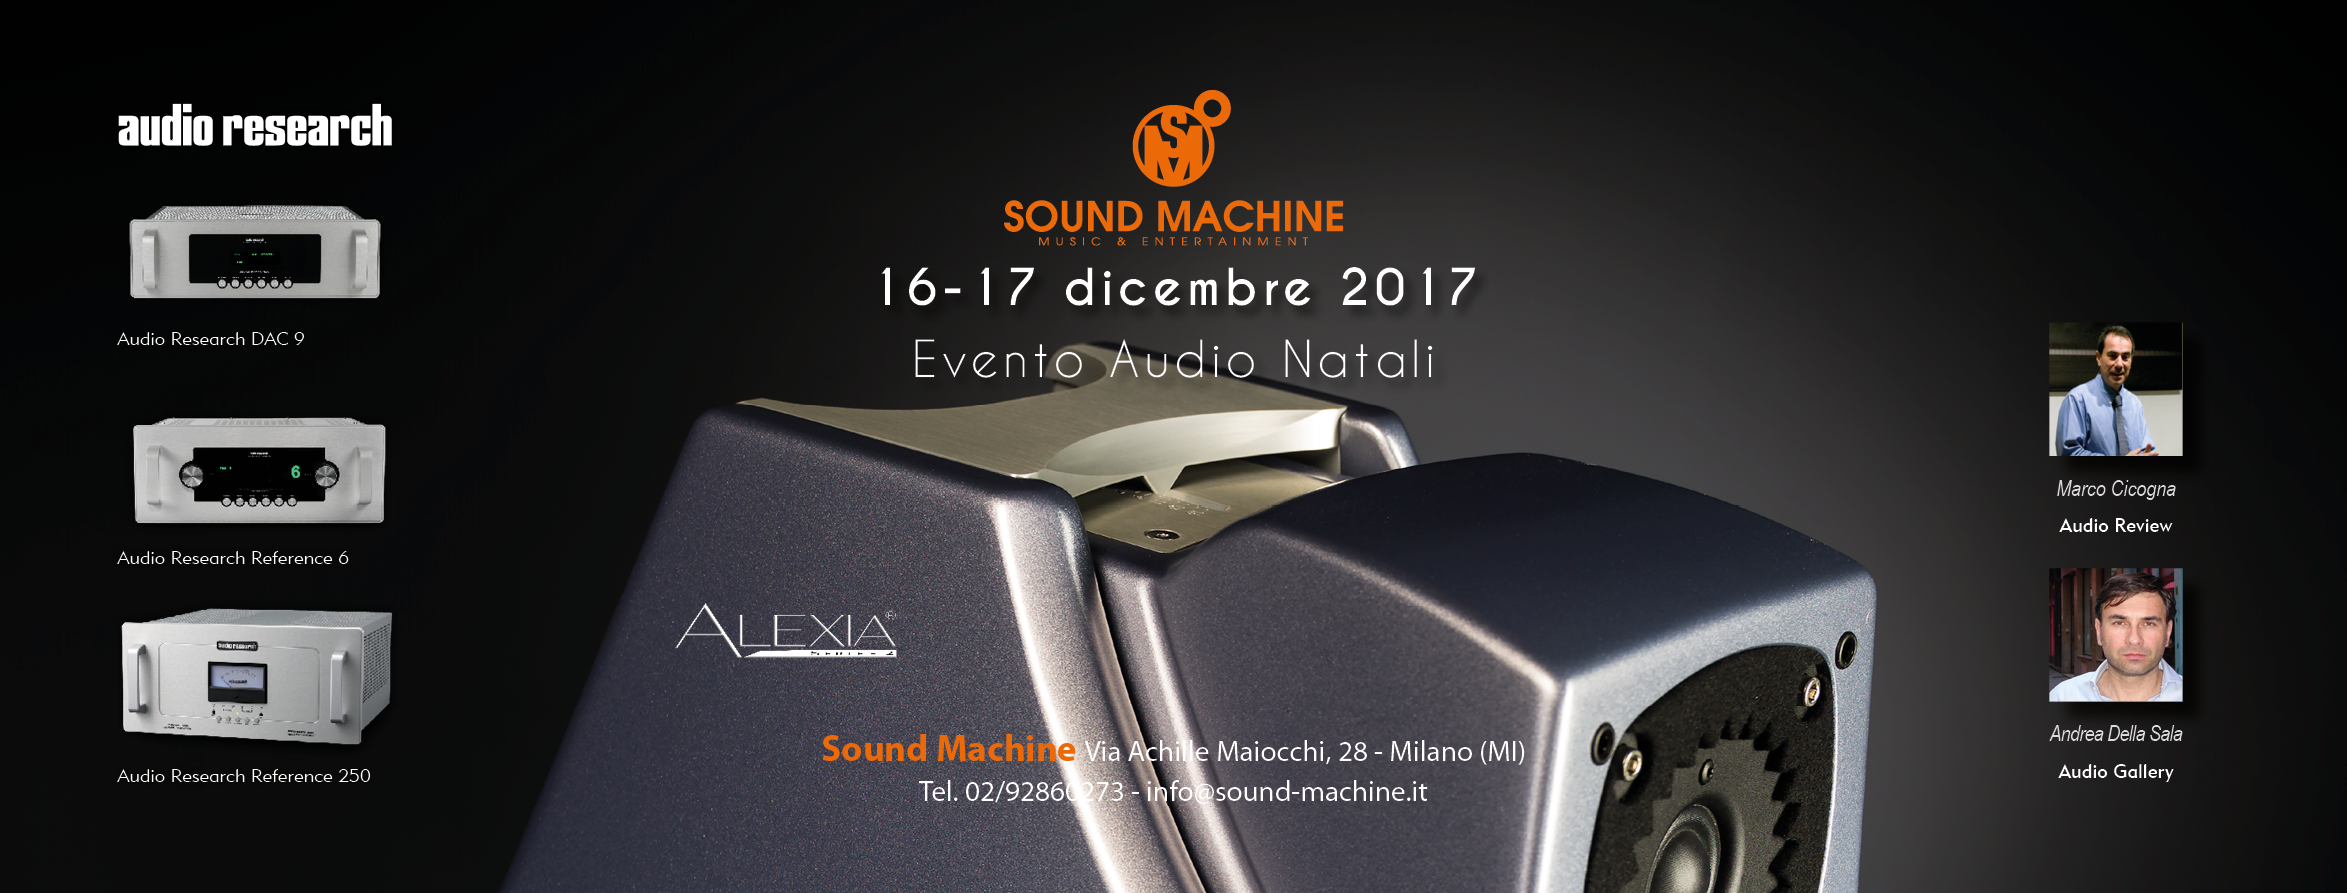 news AudioNatali - 16-17 dicembre 2017 - Evento Sound Machine